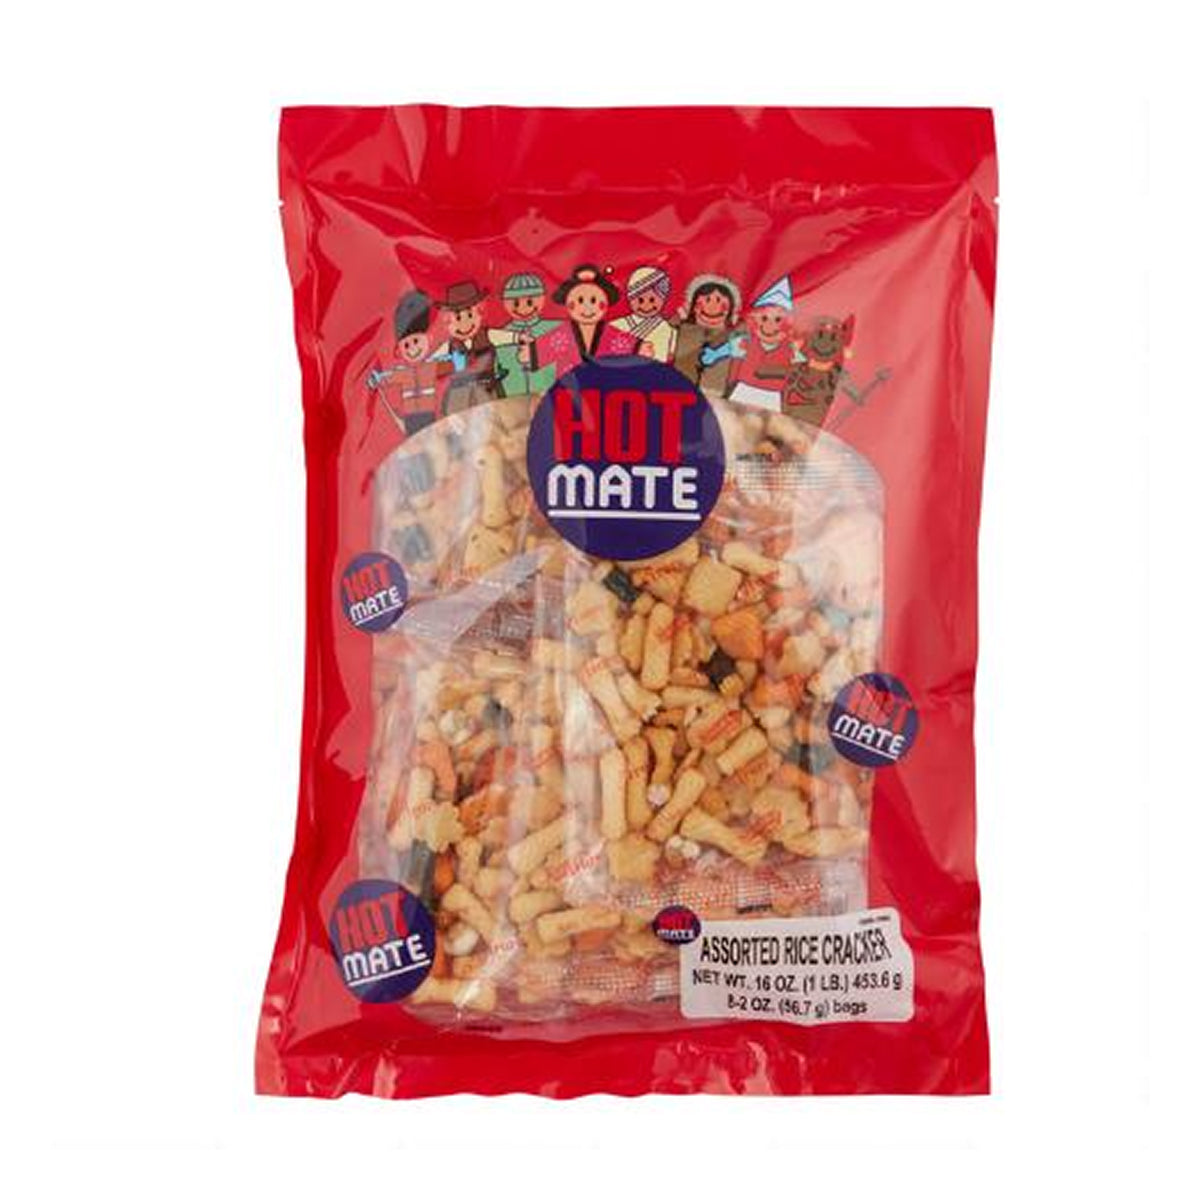 hot mate arare rice cracker mix - 16oz